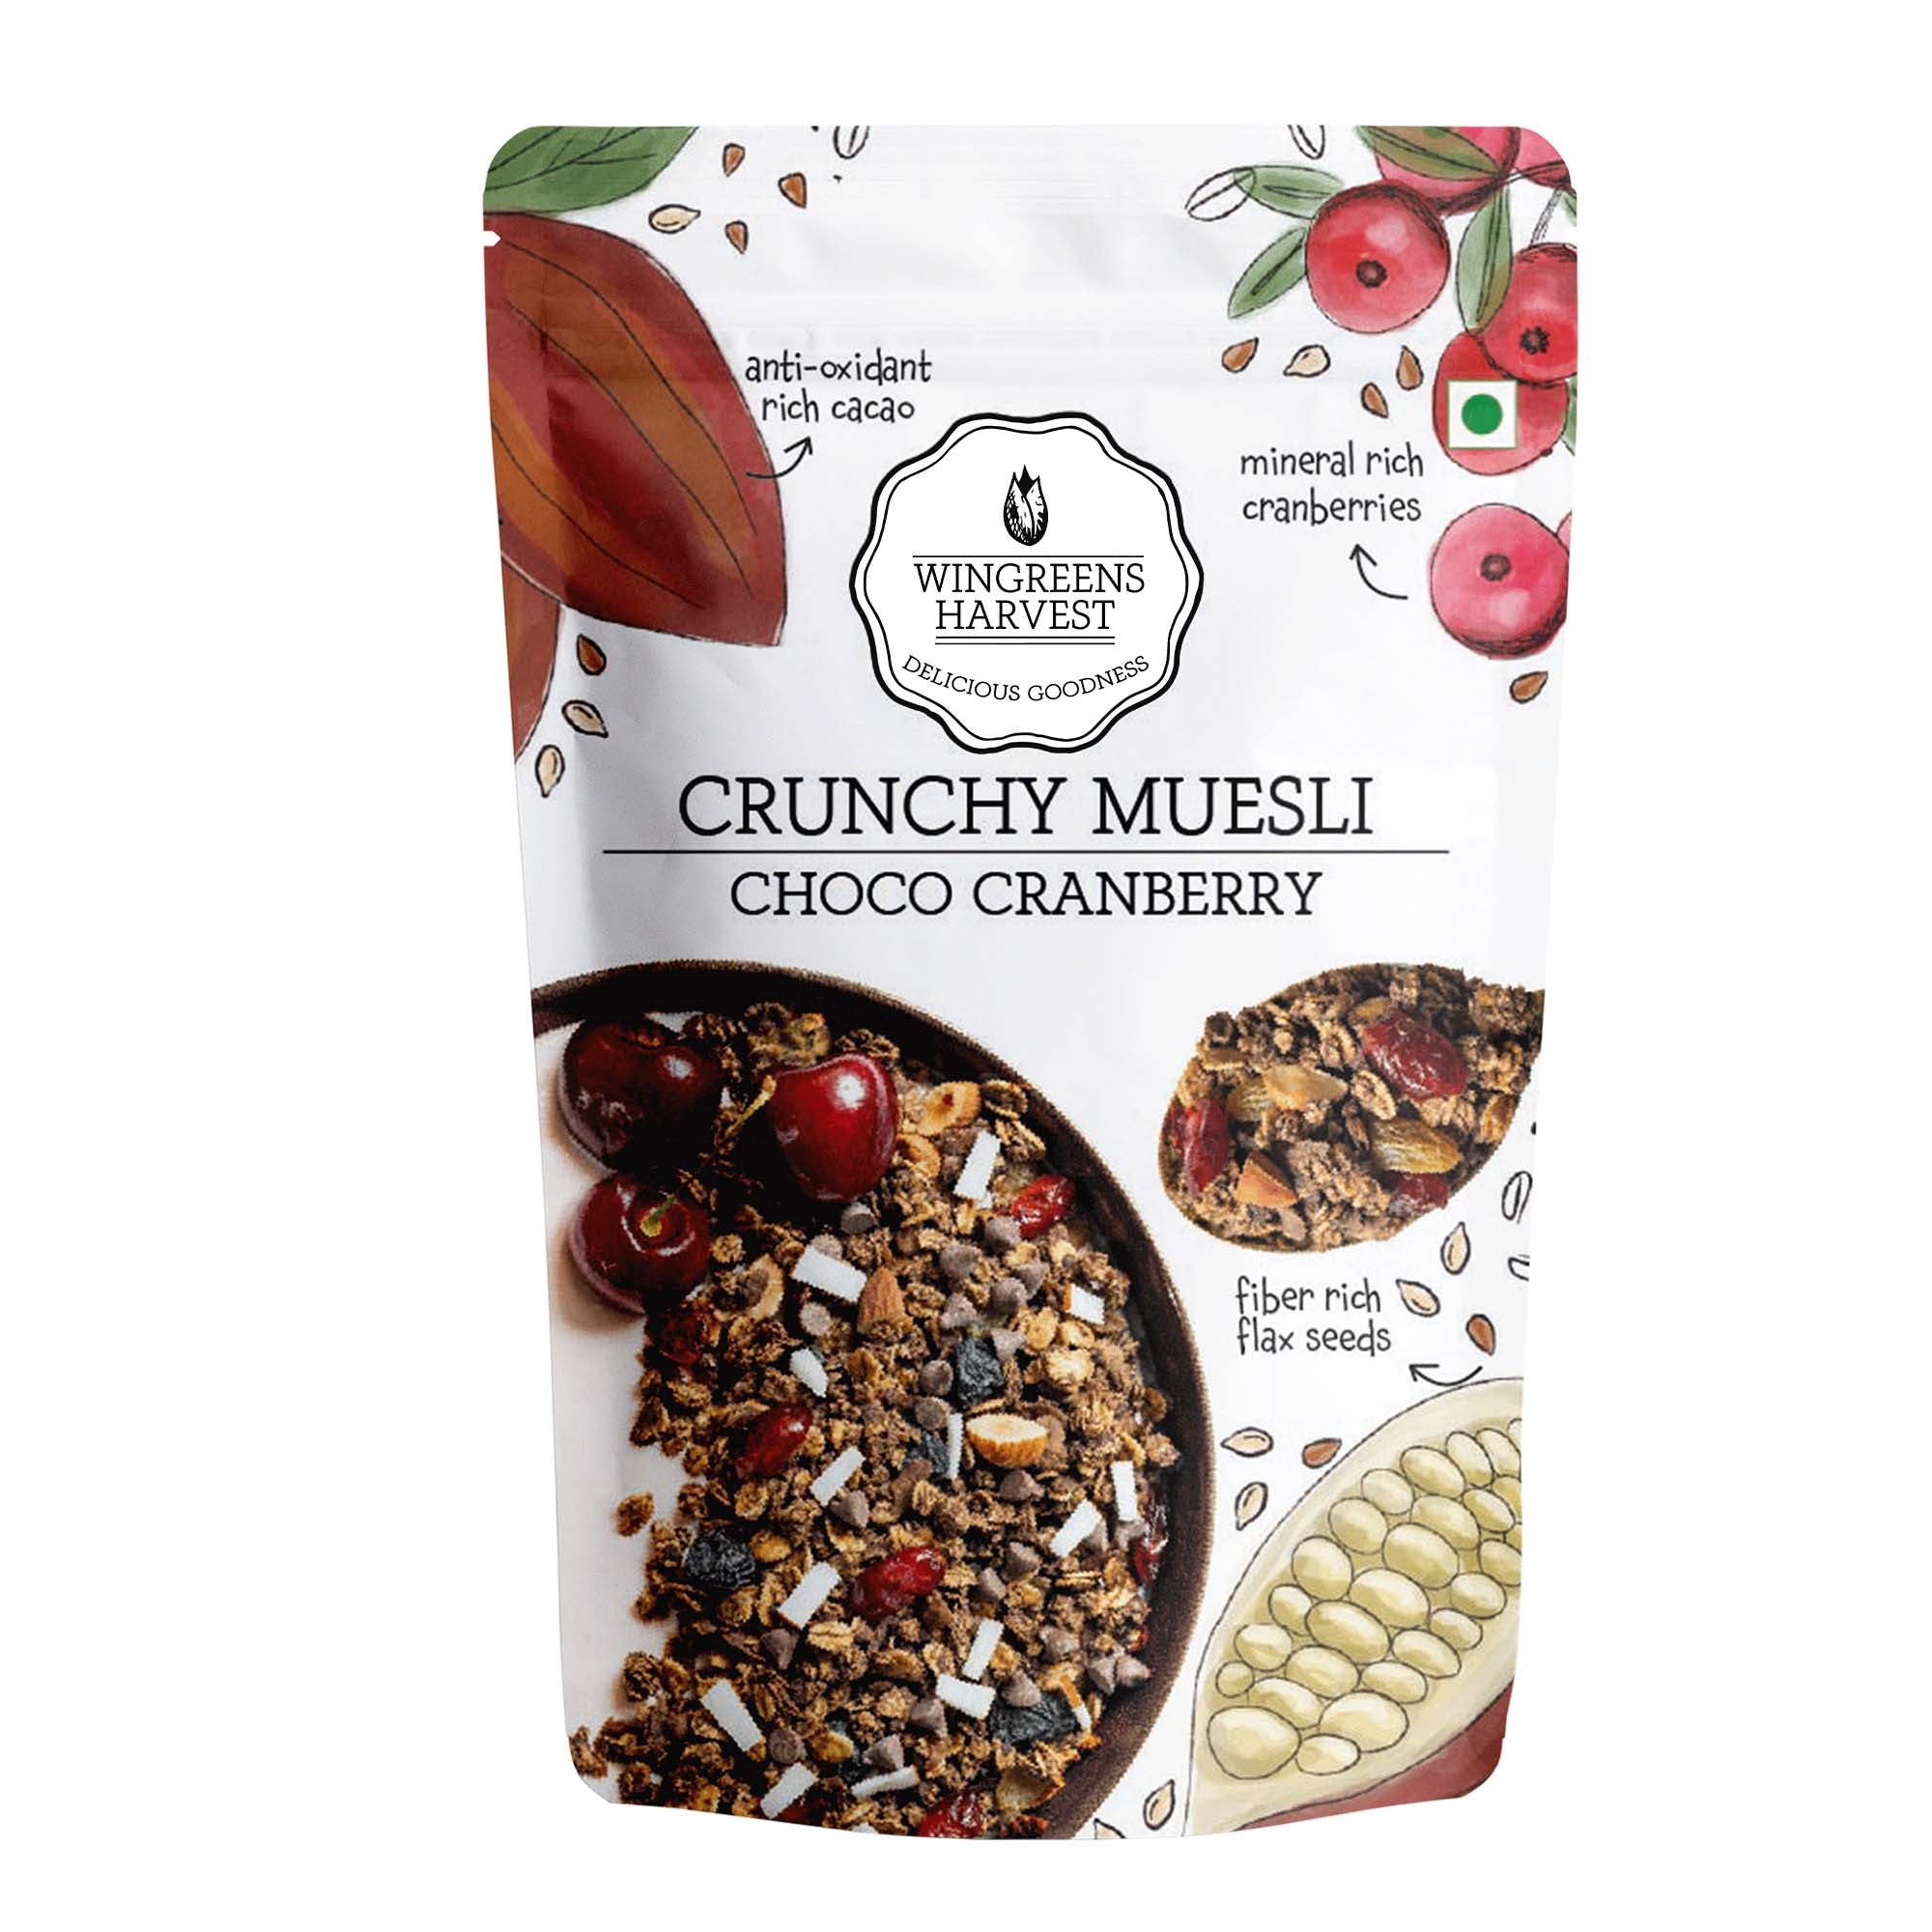 Crunchy muesli- Choco Cranberry, 800g